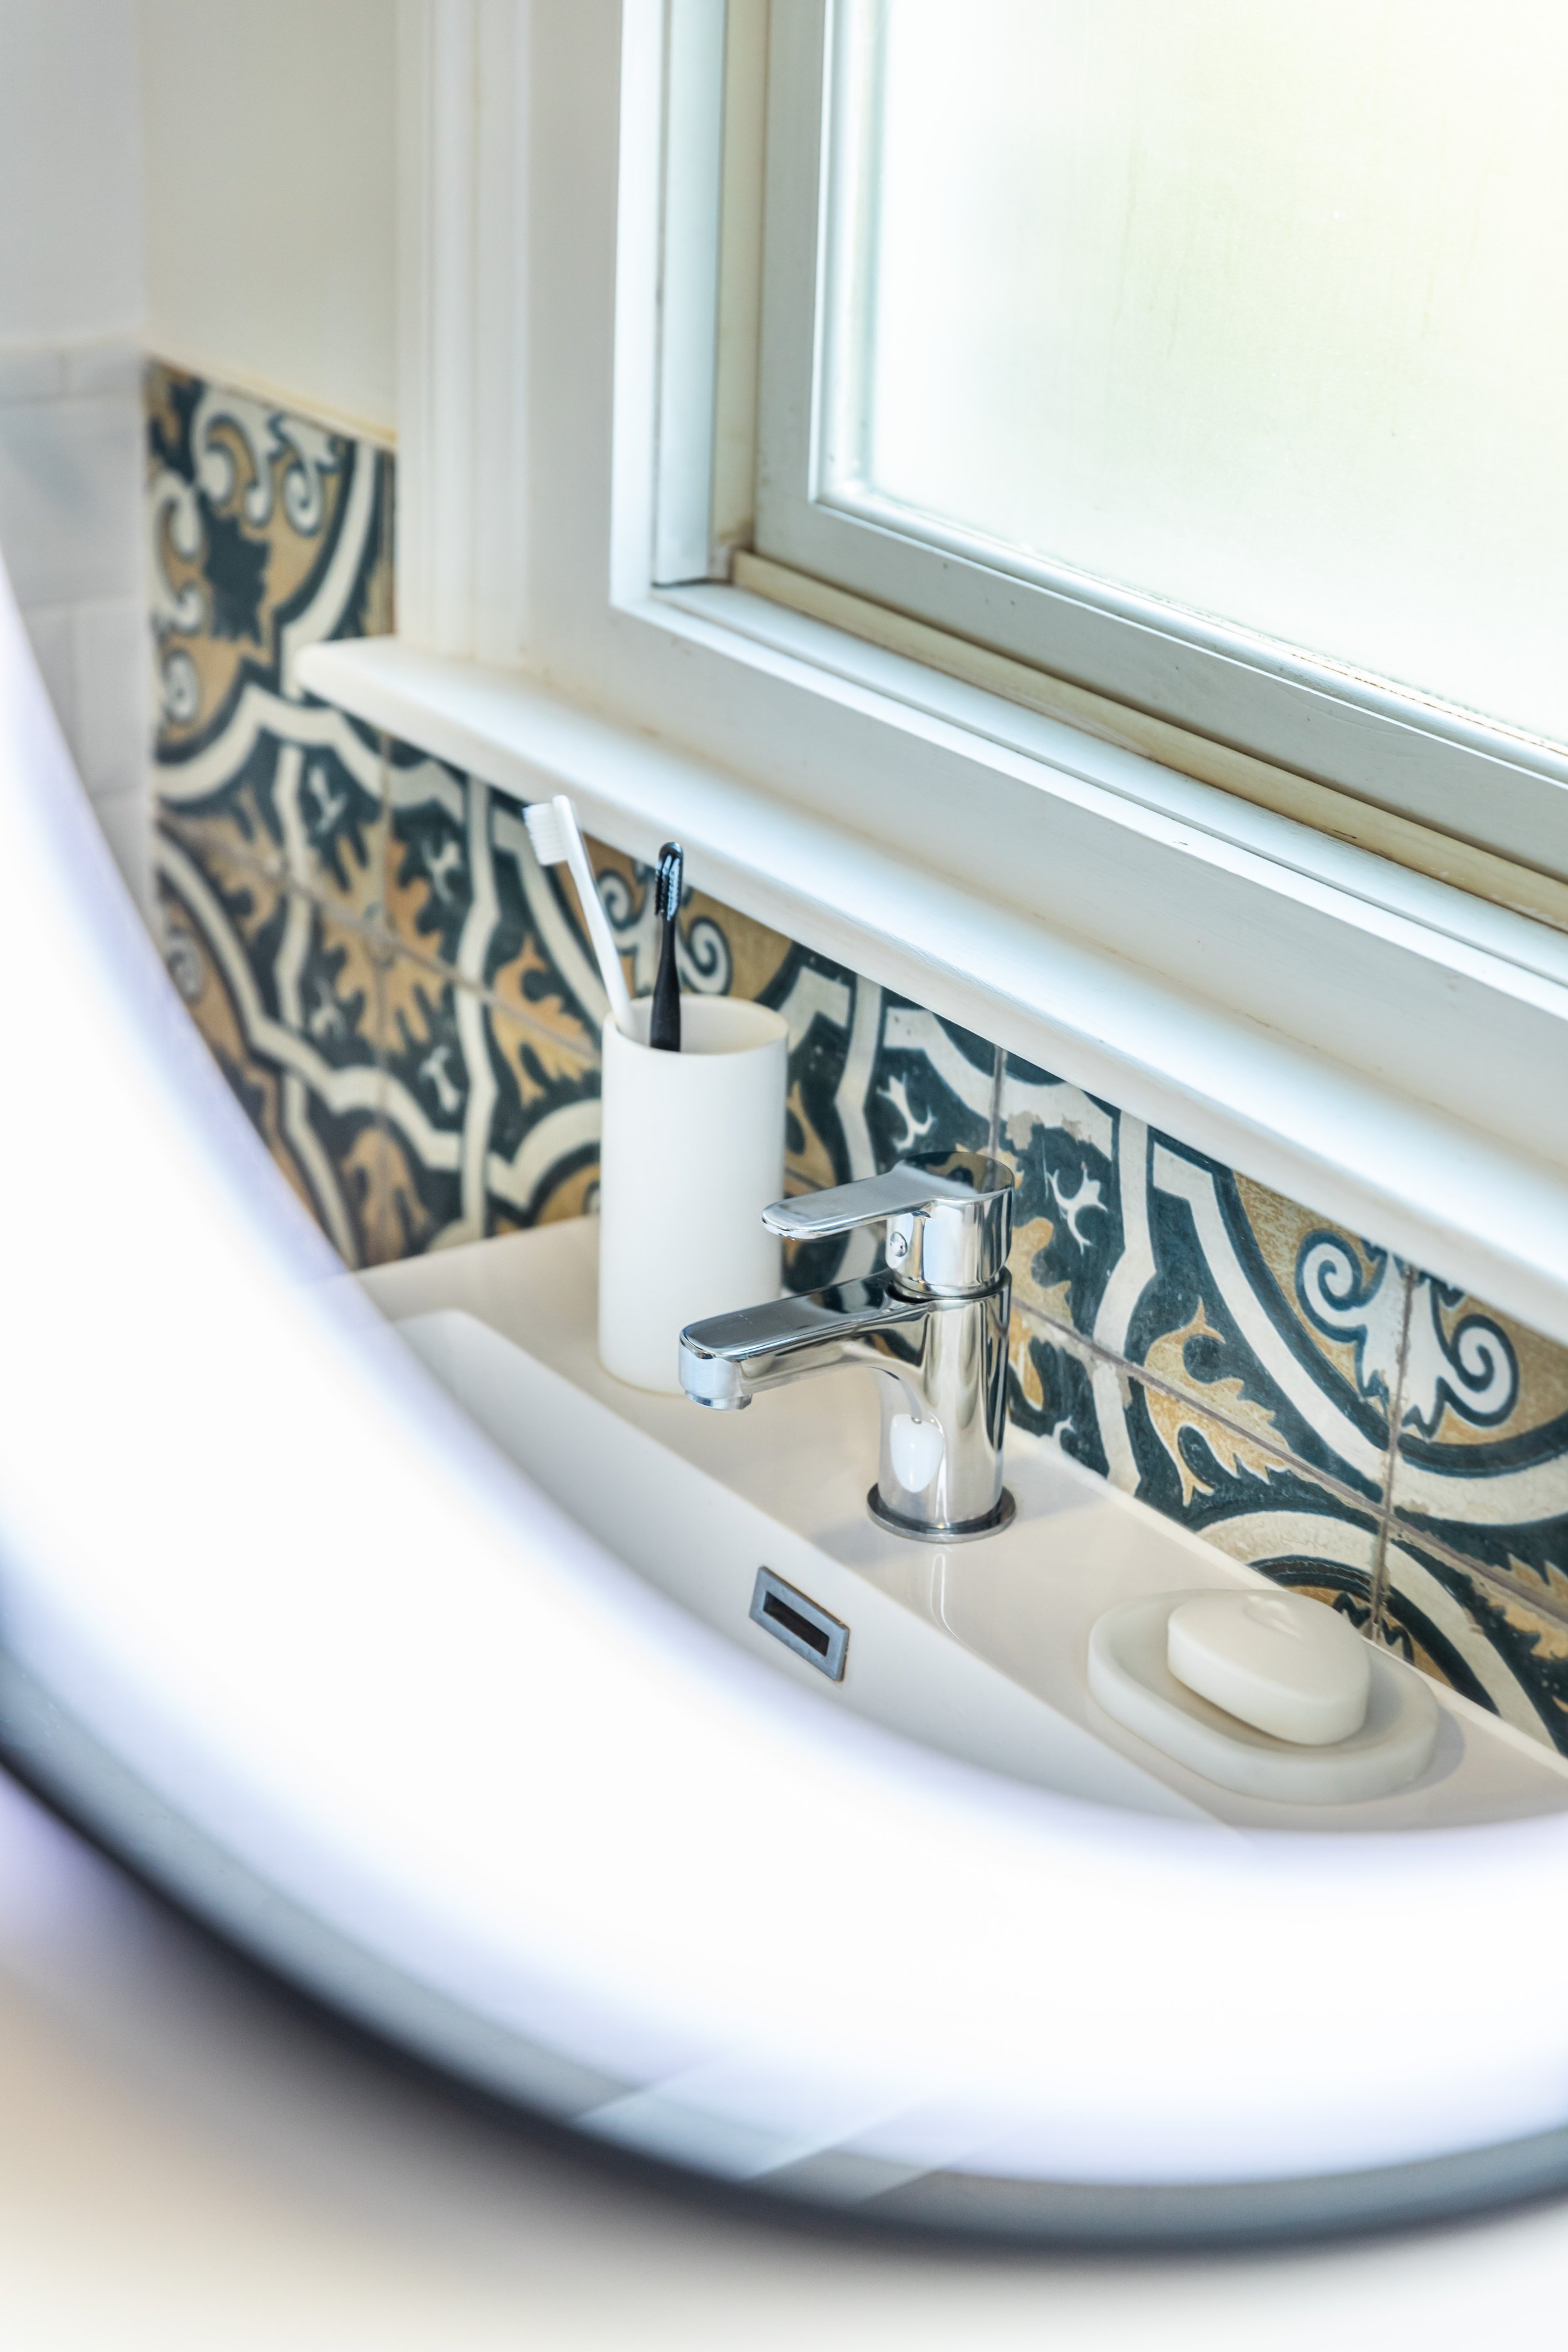 Reflection of vanity in bathroom mirror interior design London.jpg